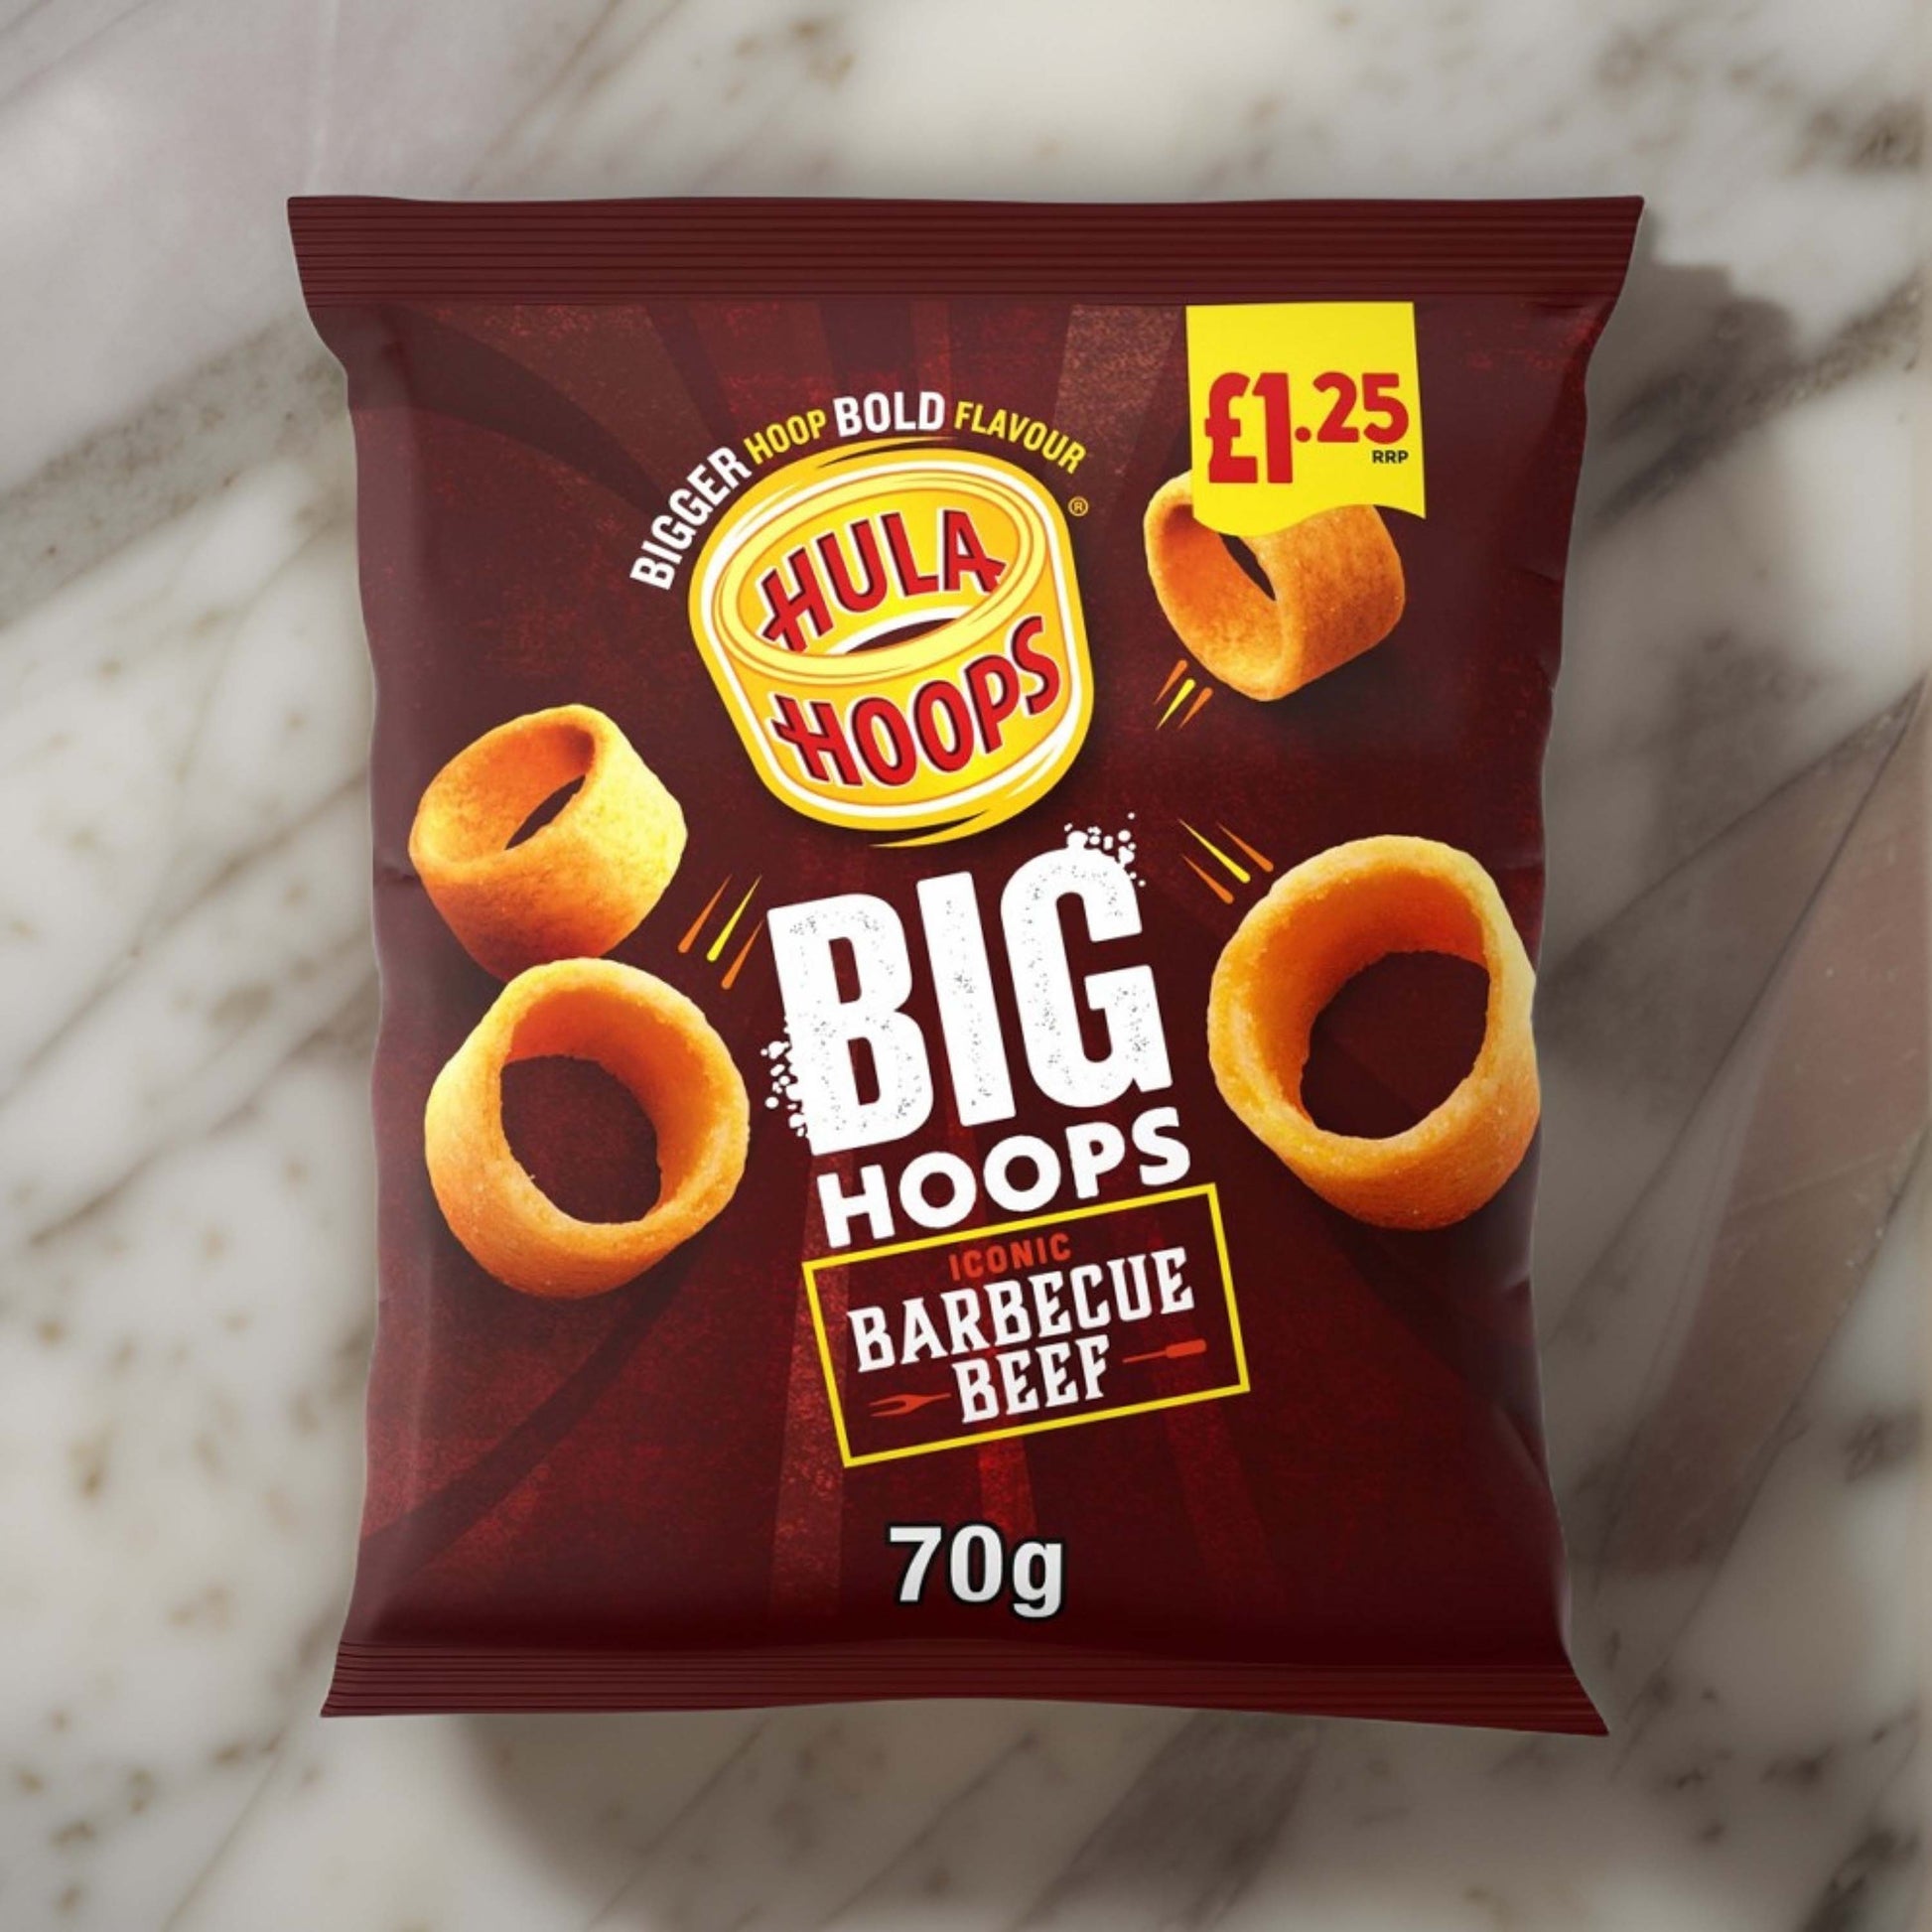 Hula Hoops Big Hoops BBQ 70g – (£1.25 Bag) - British Snacks